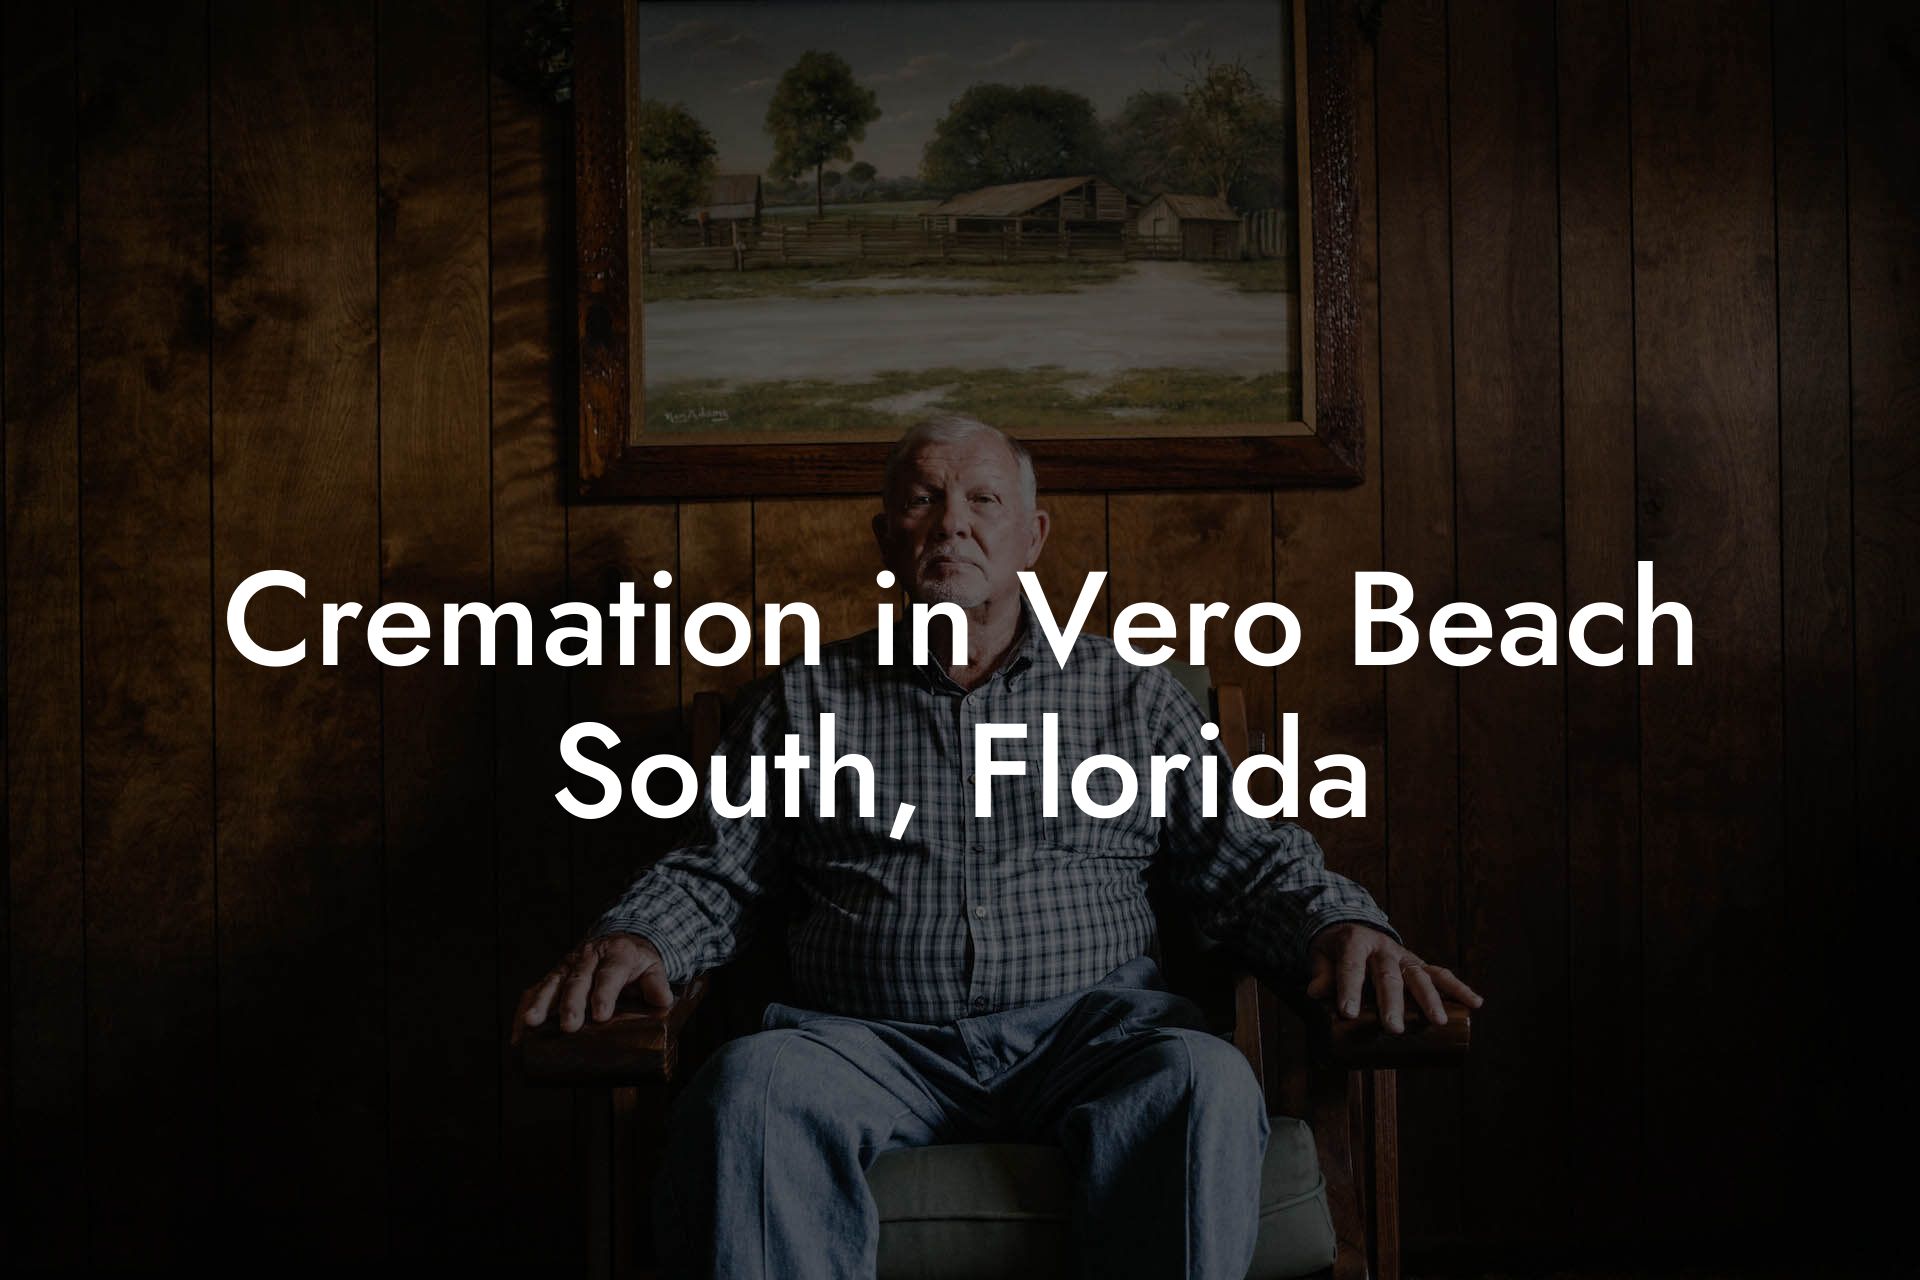 Cremation in Vero Beach South, Florida